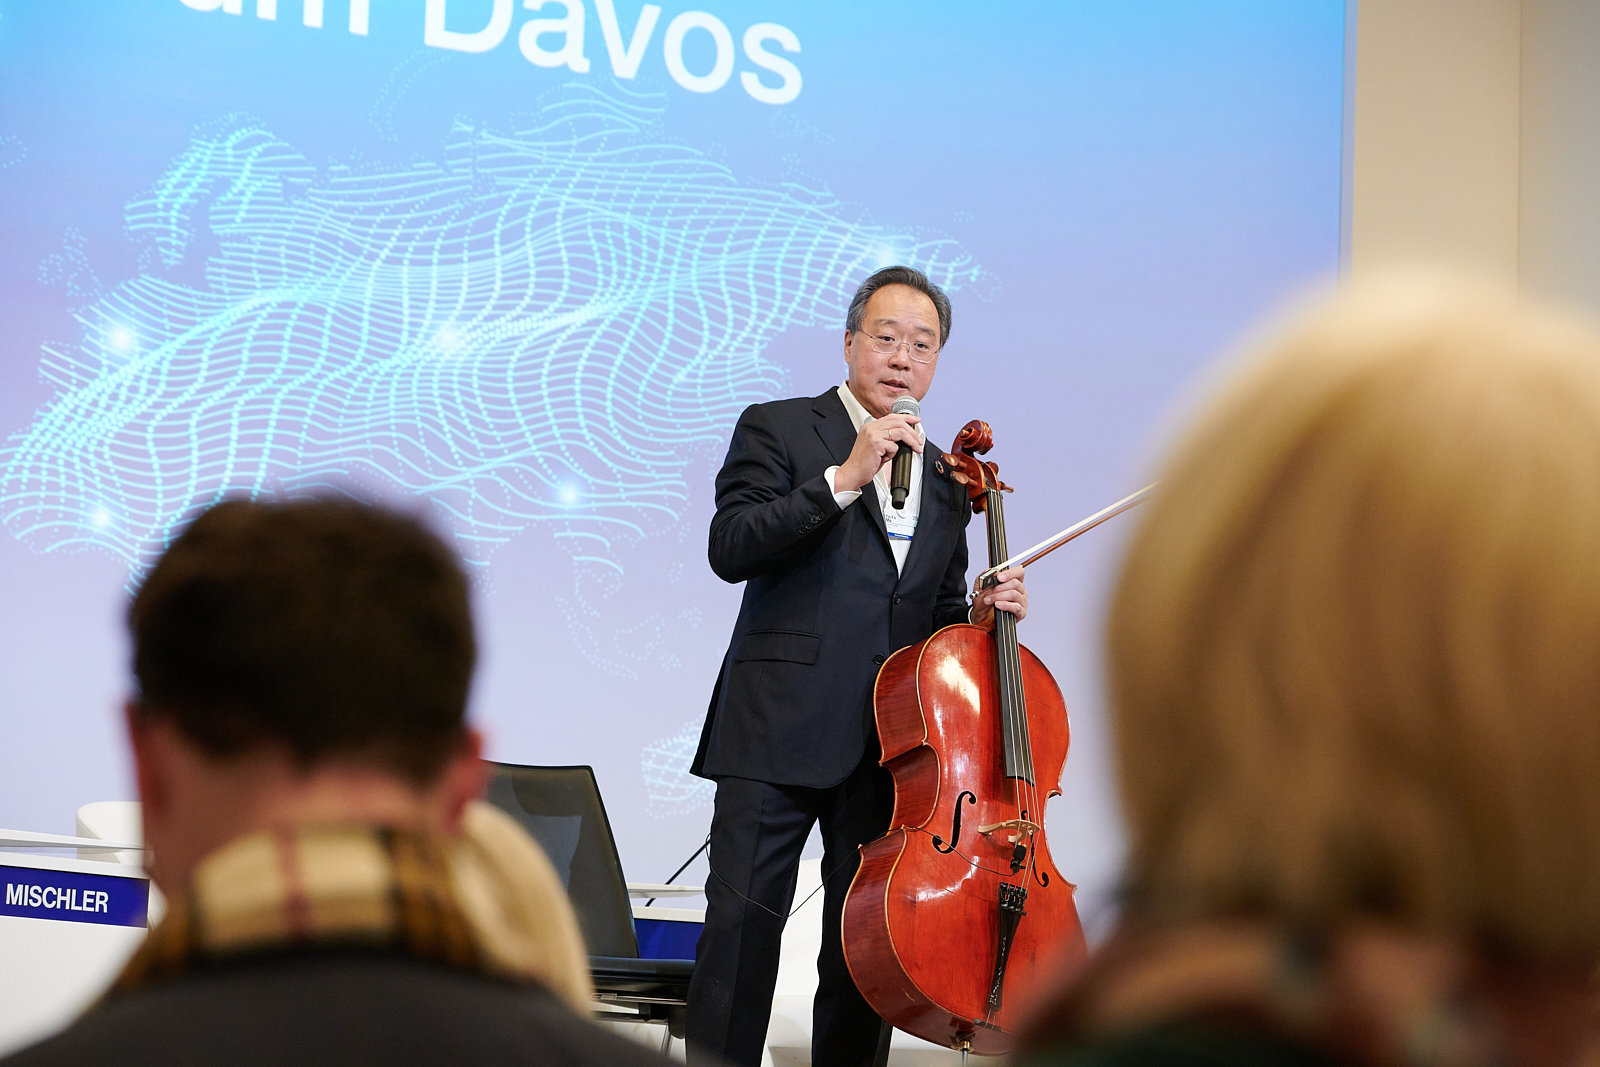 photographe Lyon, World Economic Forum Annual Meeting 2020